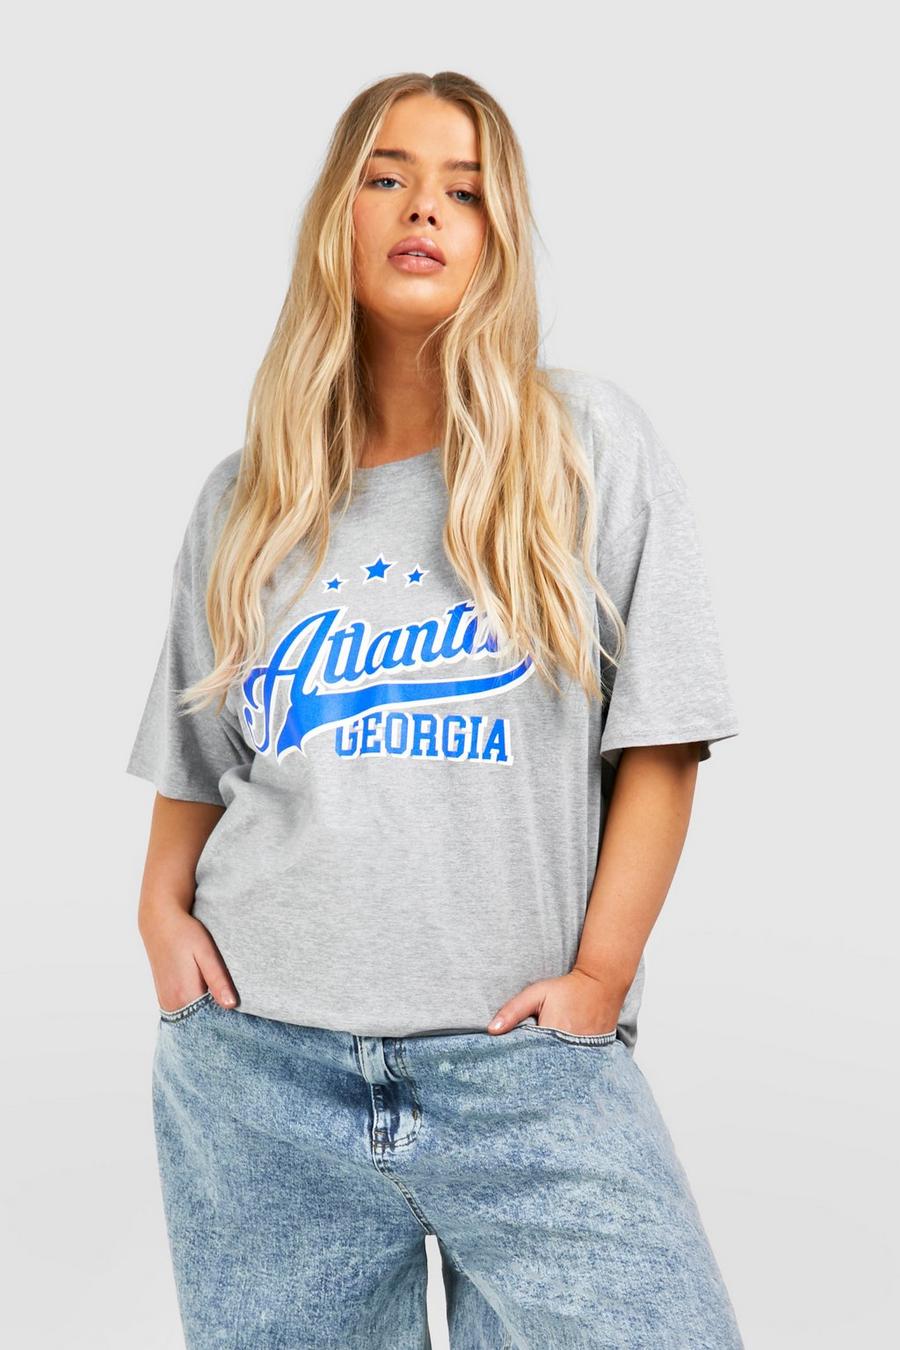 Grande taille - T-shirt à slogan Atlanta Georgia, Grey image number 1